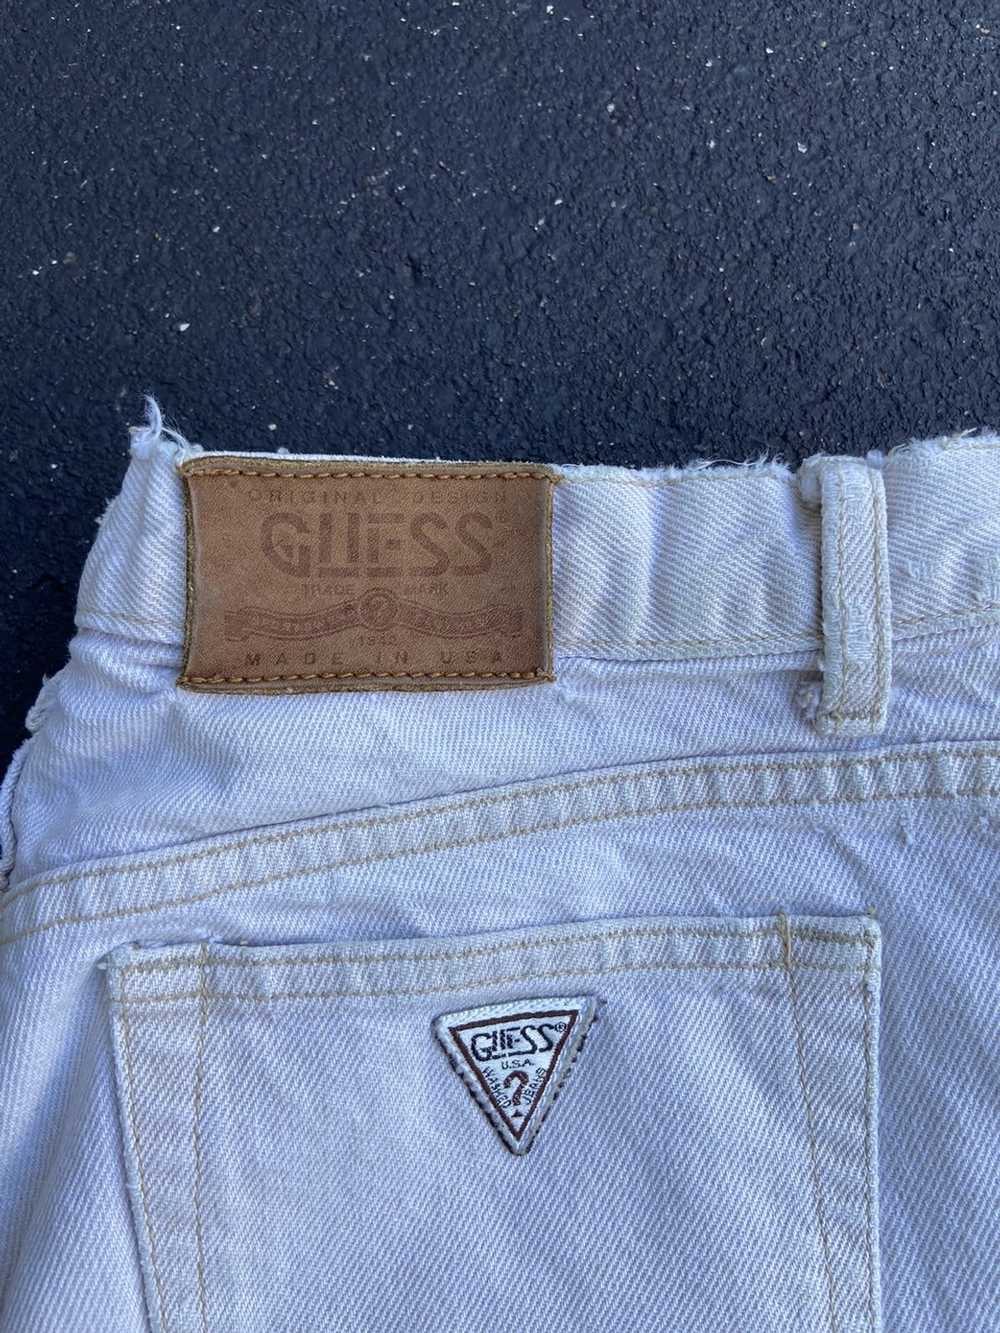 Guess × Vintage Vintage Guess Denim Jeans - image 2